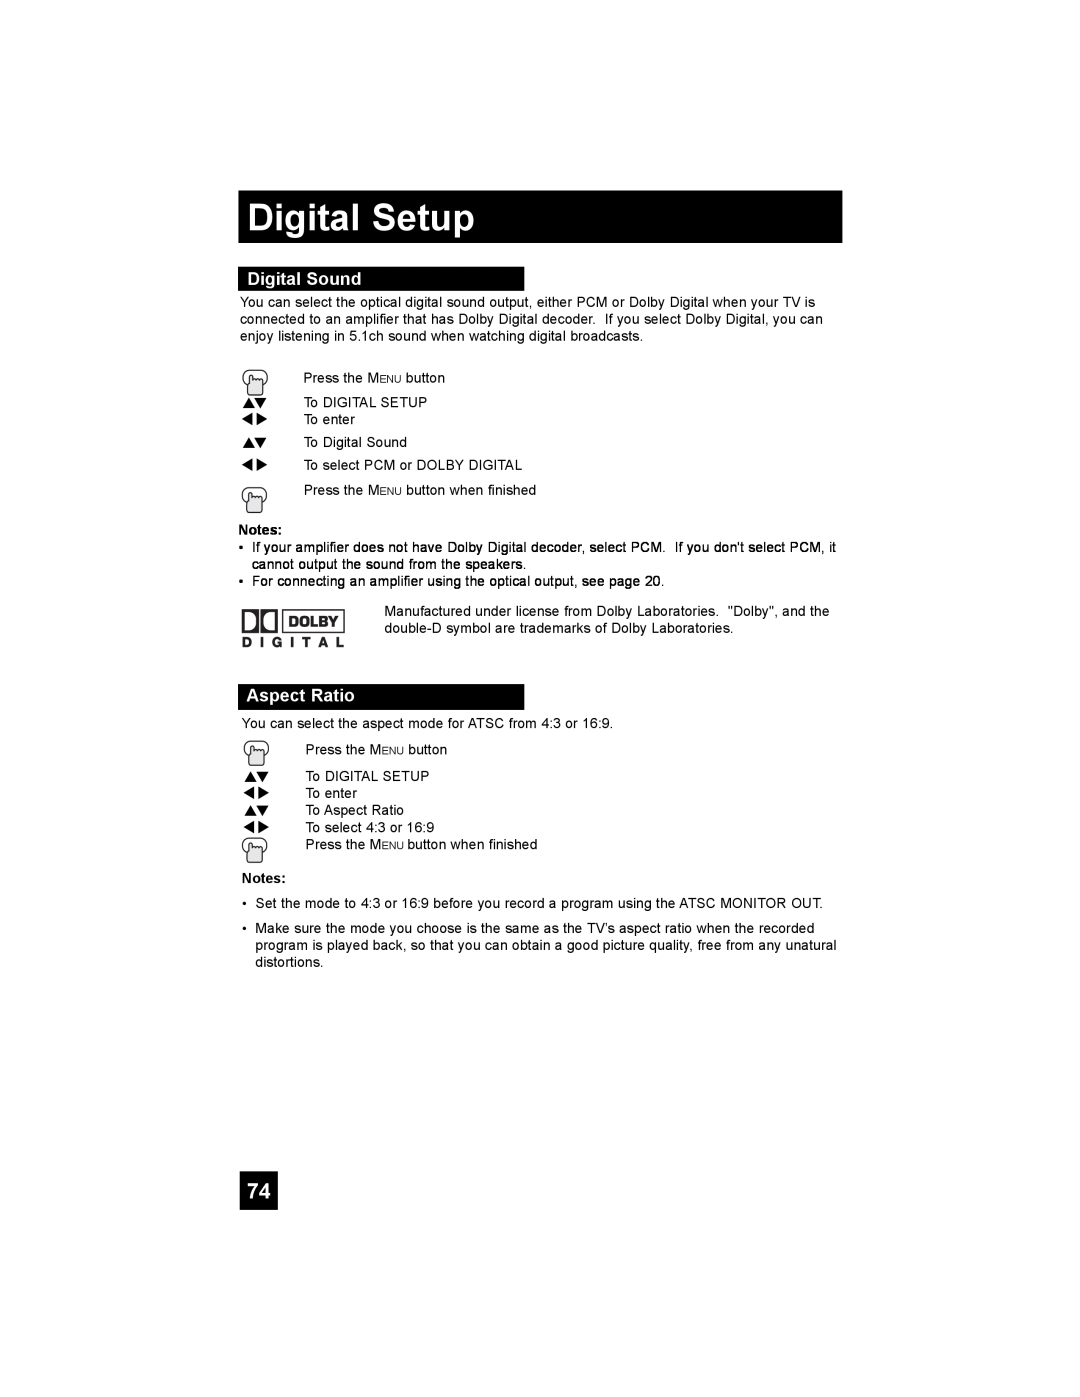 JVC PD-42X776 manual Digital Sound, Aspect Ratio, Digital Setup, Press the M ENU button when finished 